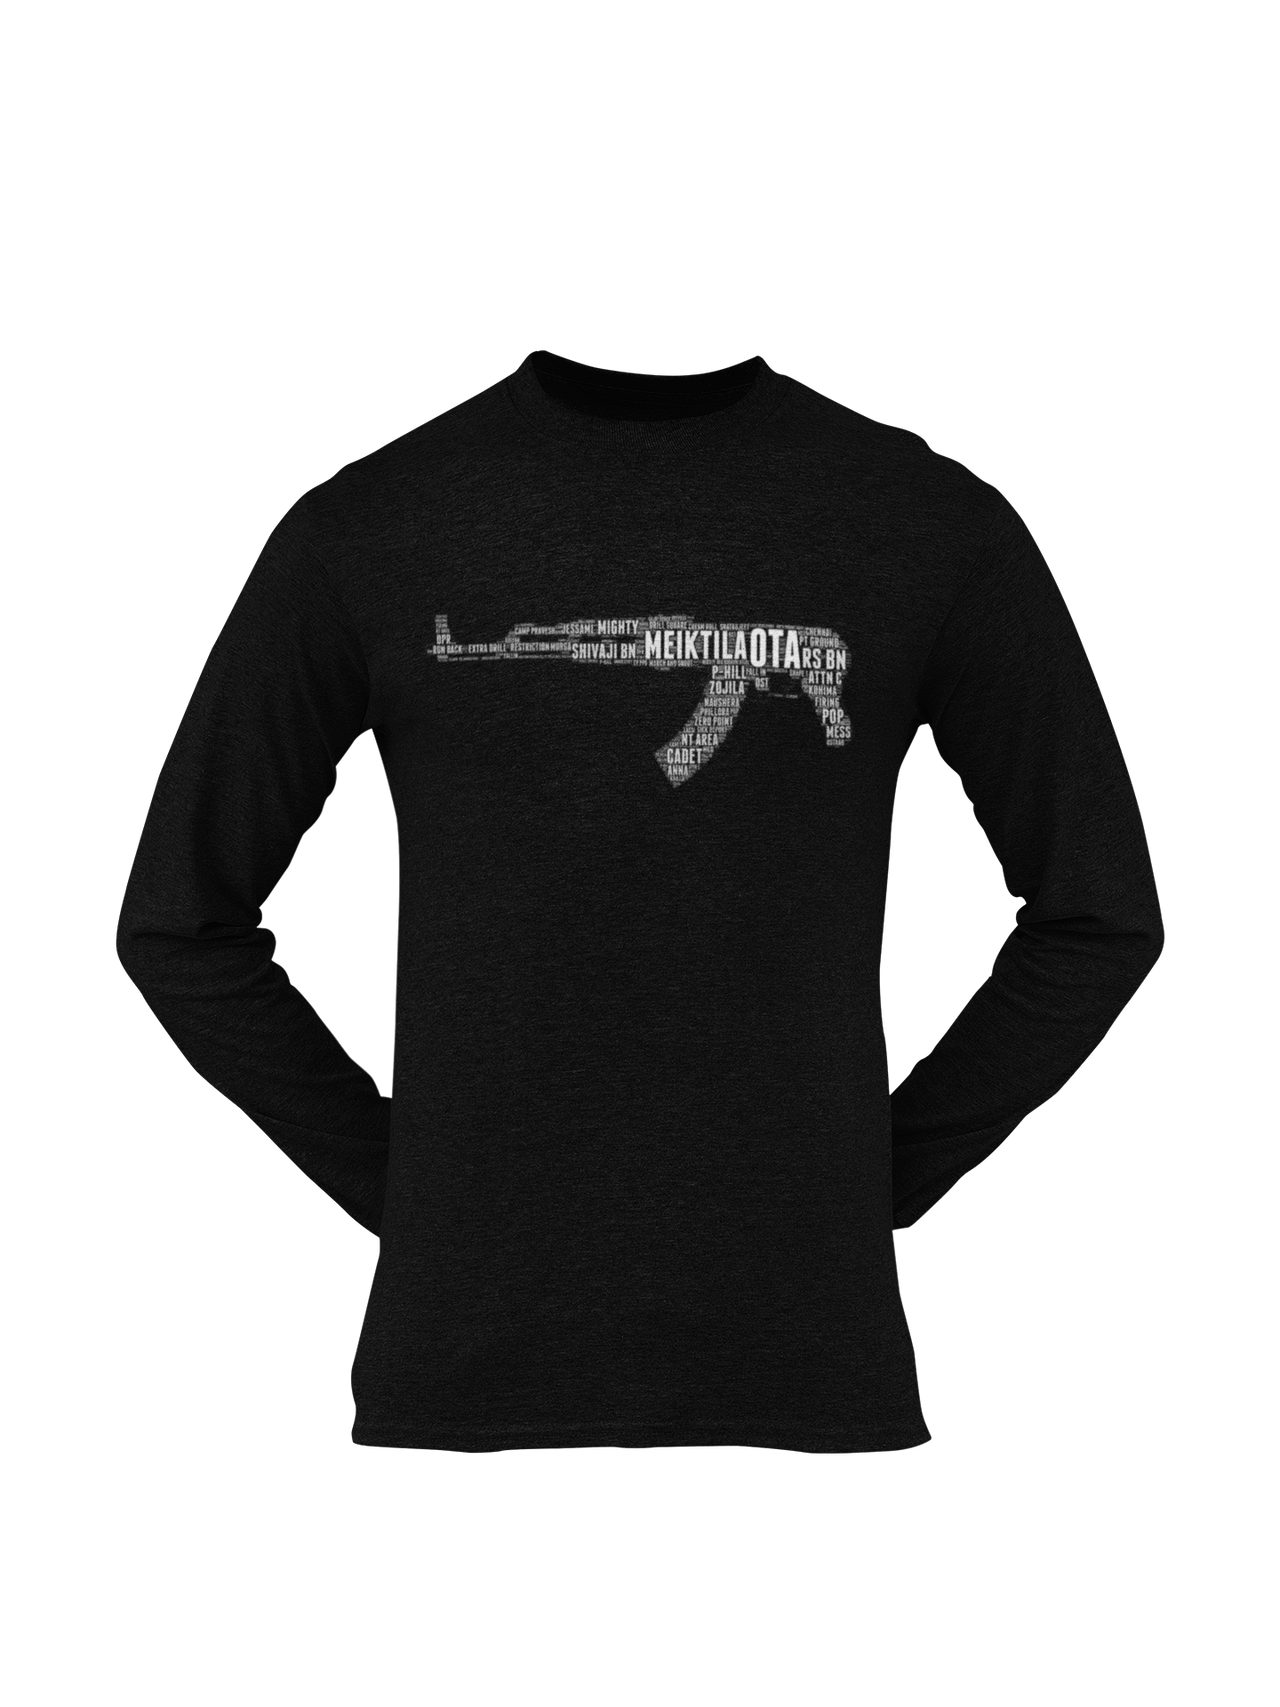 OTA T-shirt - Word Cloud Meiktila - AK-47 Folding Stock (Men)